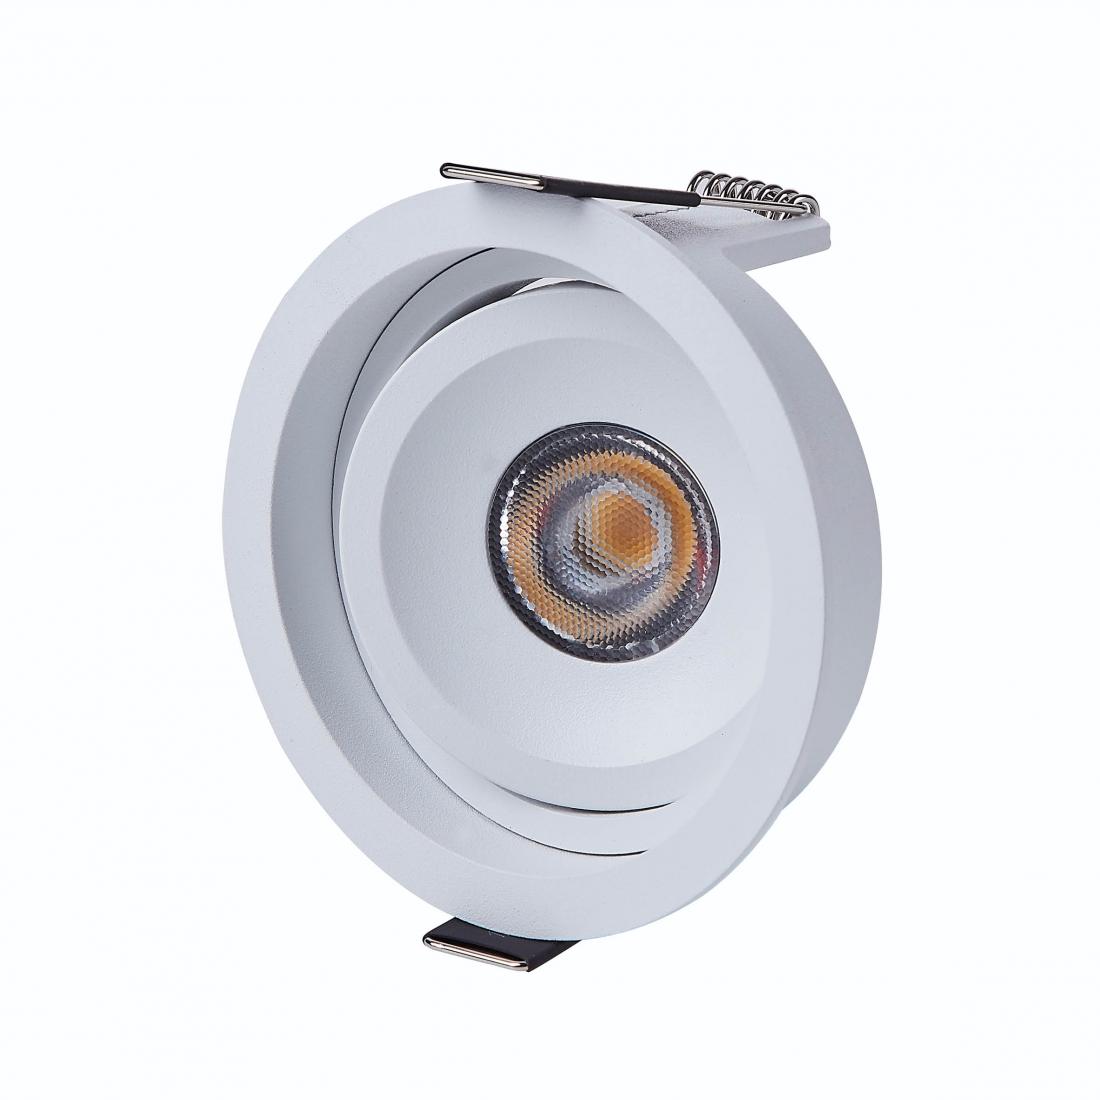 Nordic smart adjustable 7watt led cob spot downlight with different height